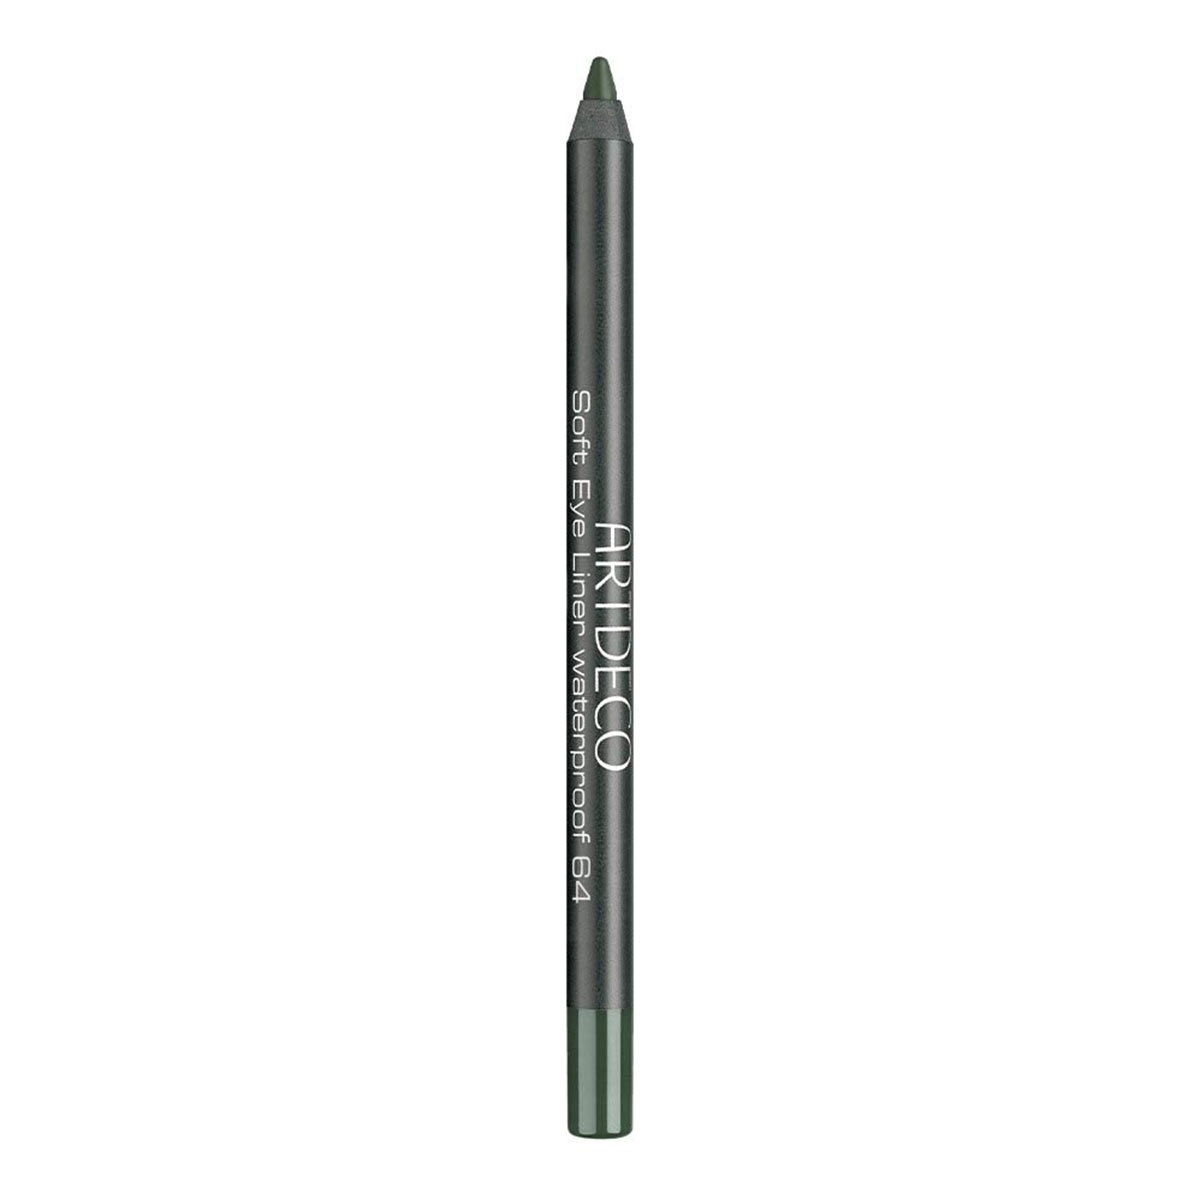  مداد چشم شماره 64 آرت دکو ARTDECO مدل soft eye liner waterproof وزن 1.2 گرم 